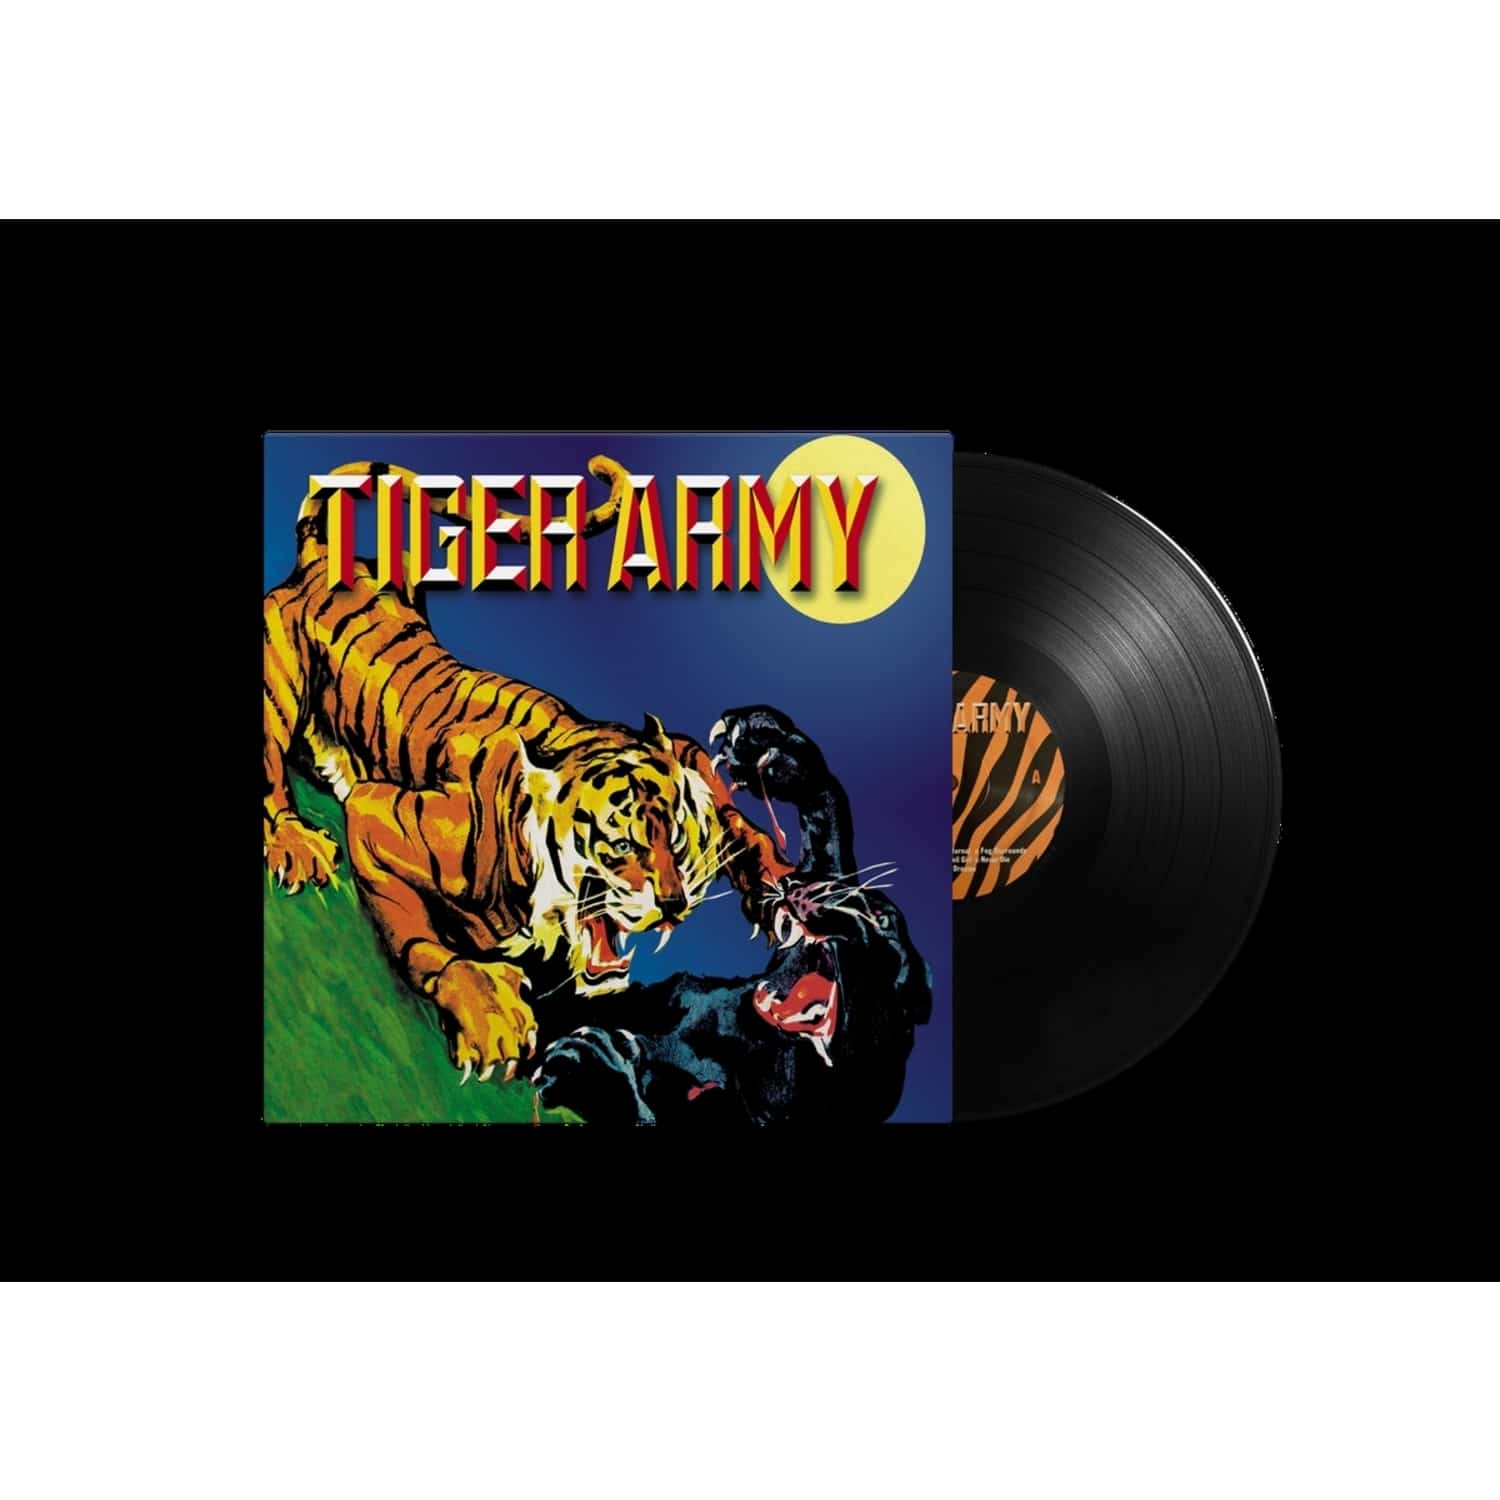 Tiger Army - TIGER ARMY 